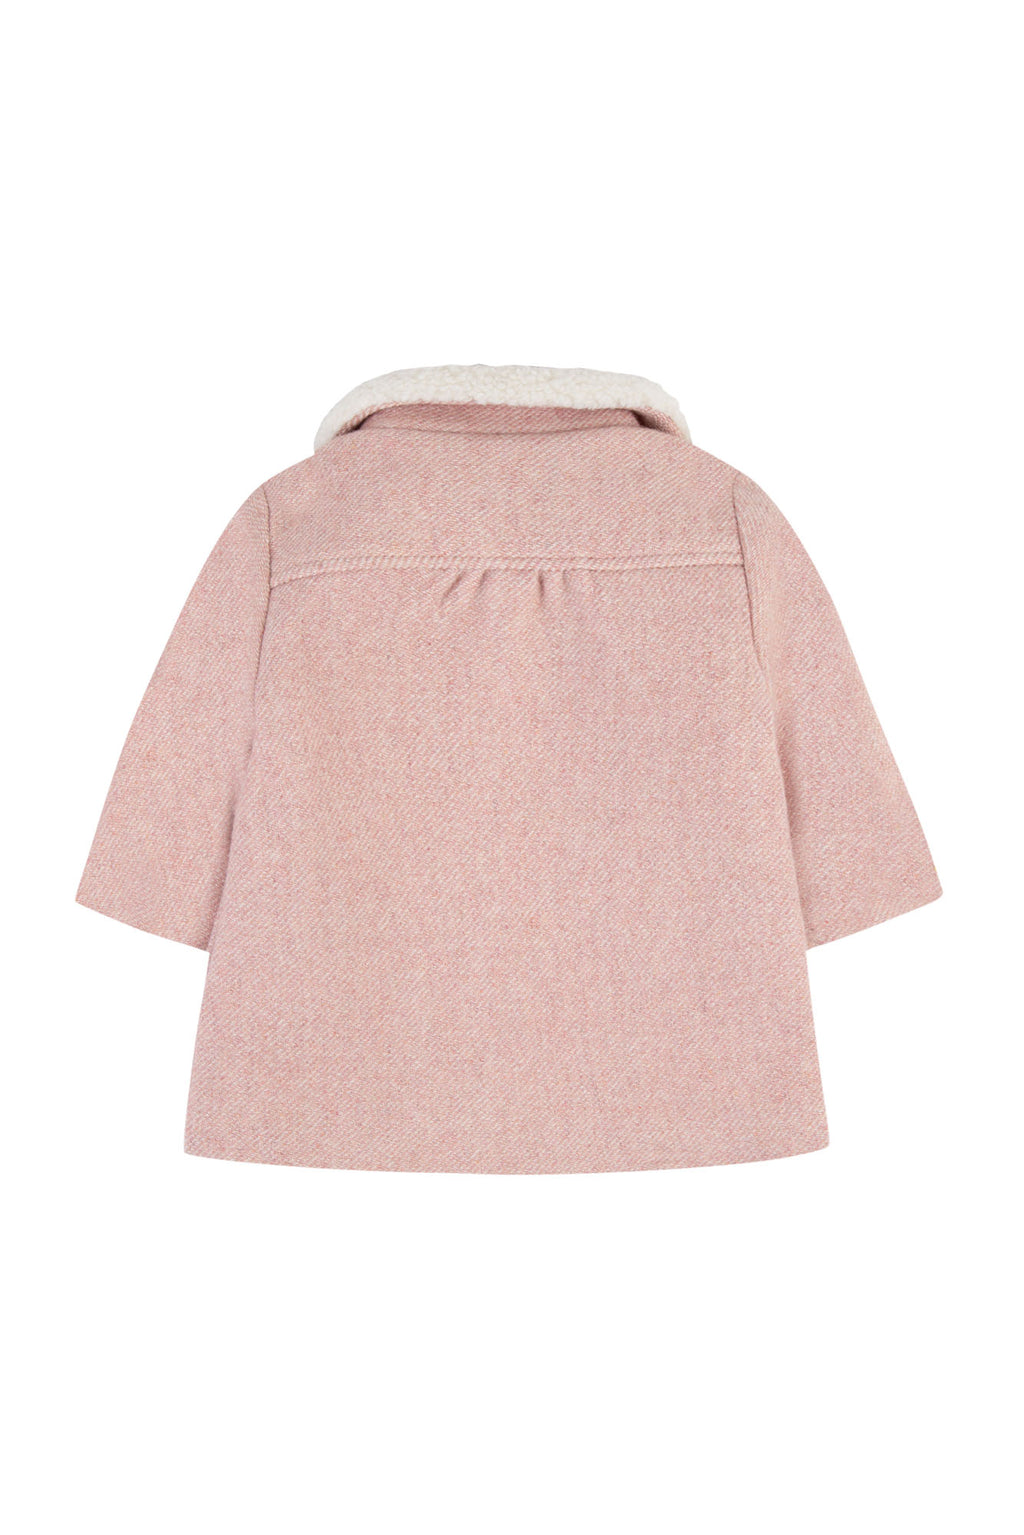 Coat - Old Pink Wool Collar Imitation fur